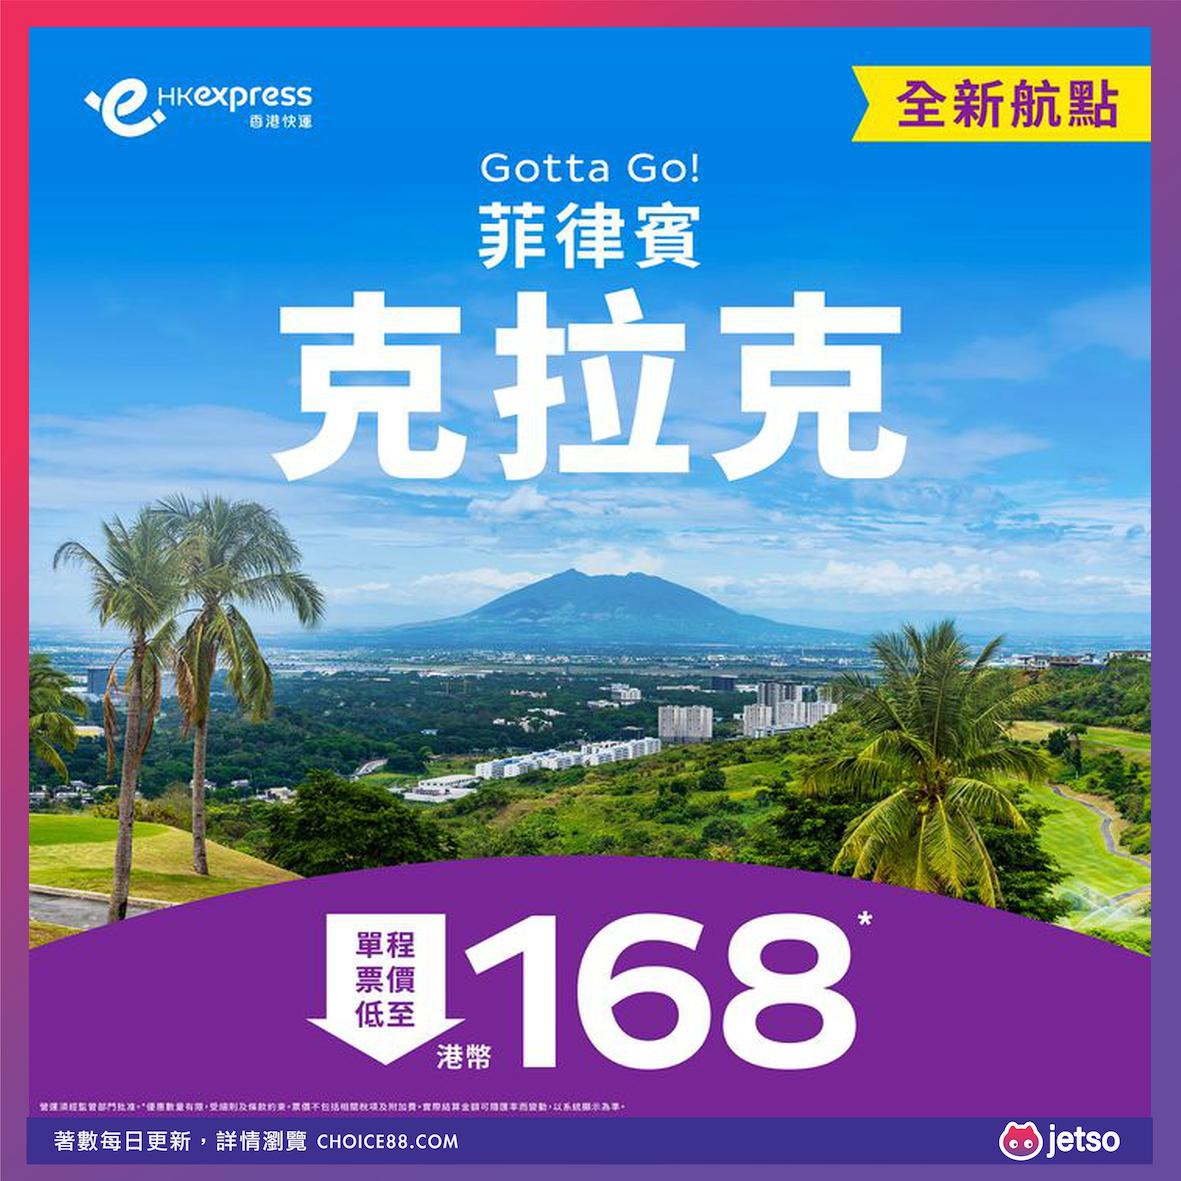 HK Express : [机票优惠]克拉克单程票价低至港币168